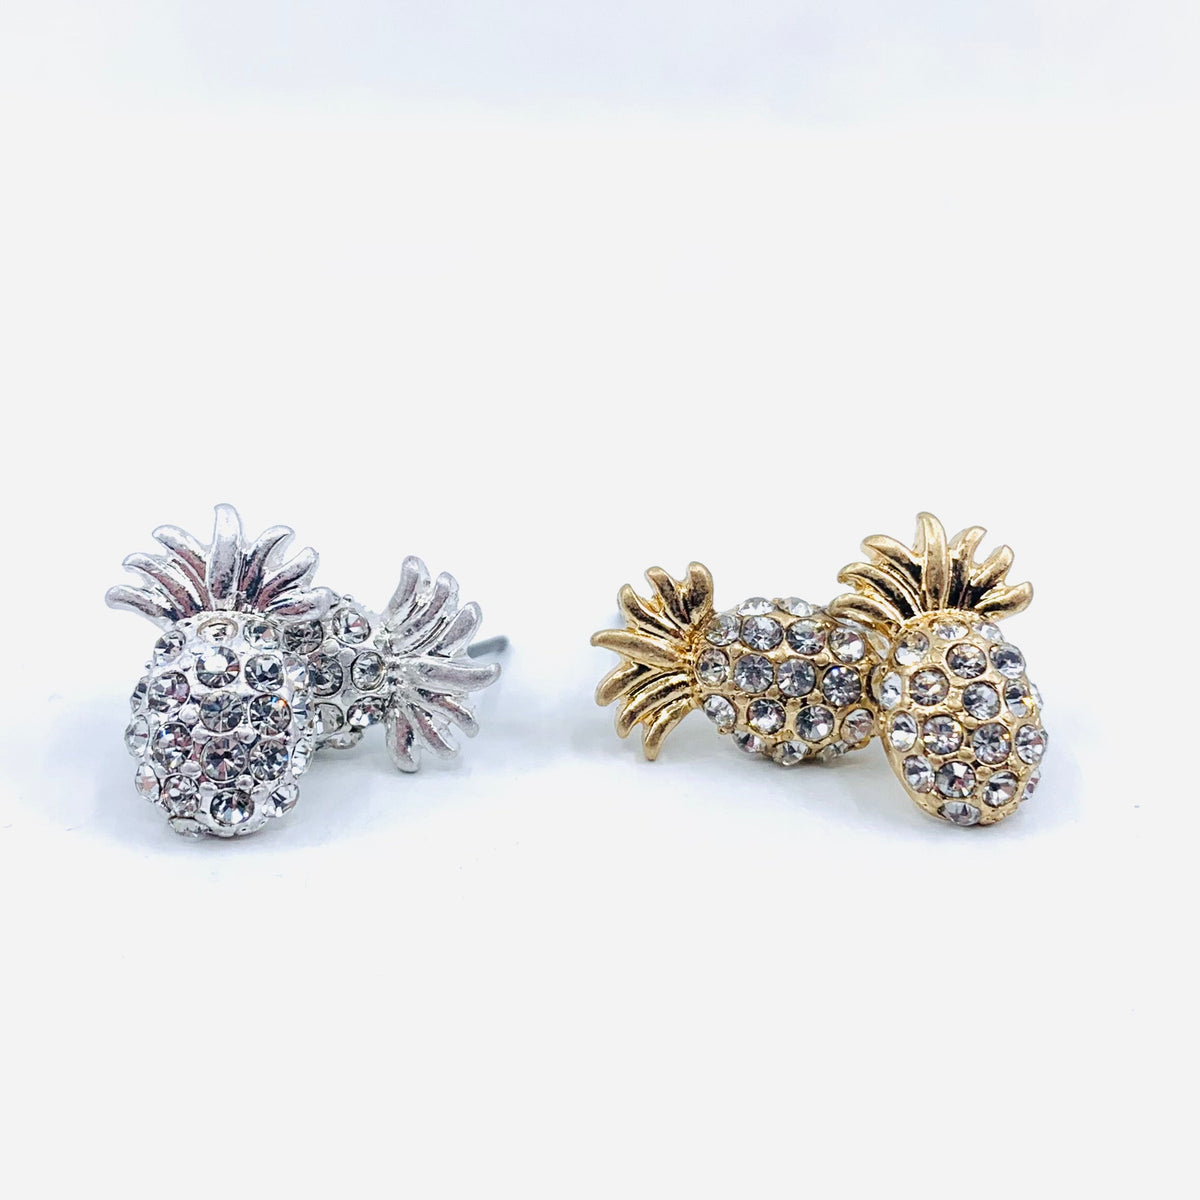 Rhinestone Pineapple Earrings Jewelry Cloie NY 